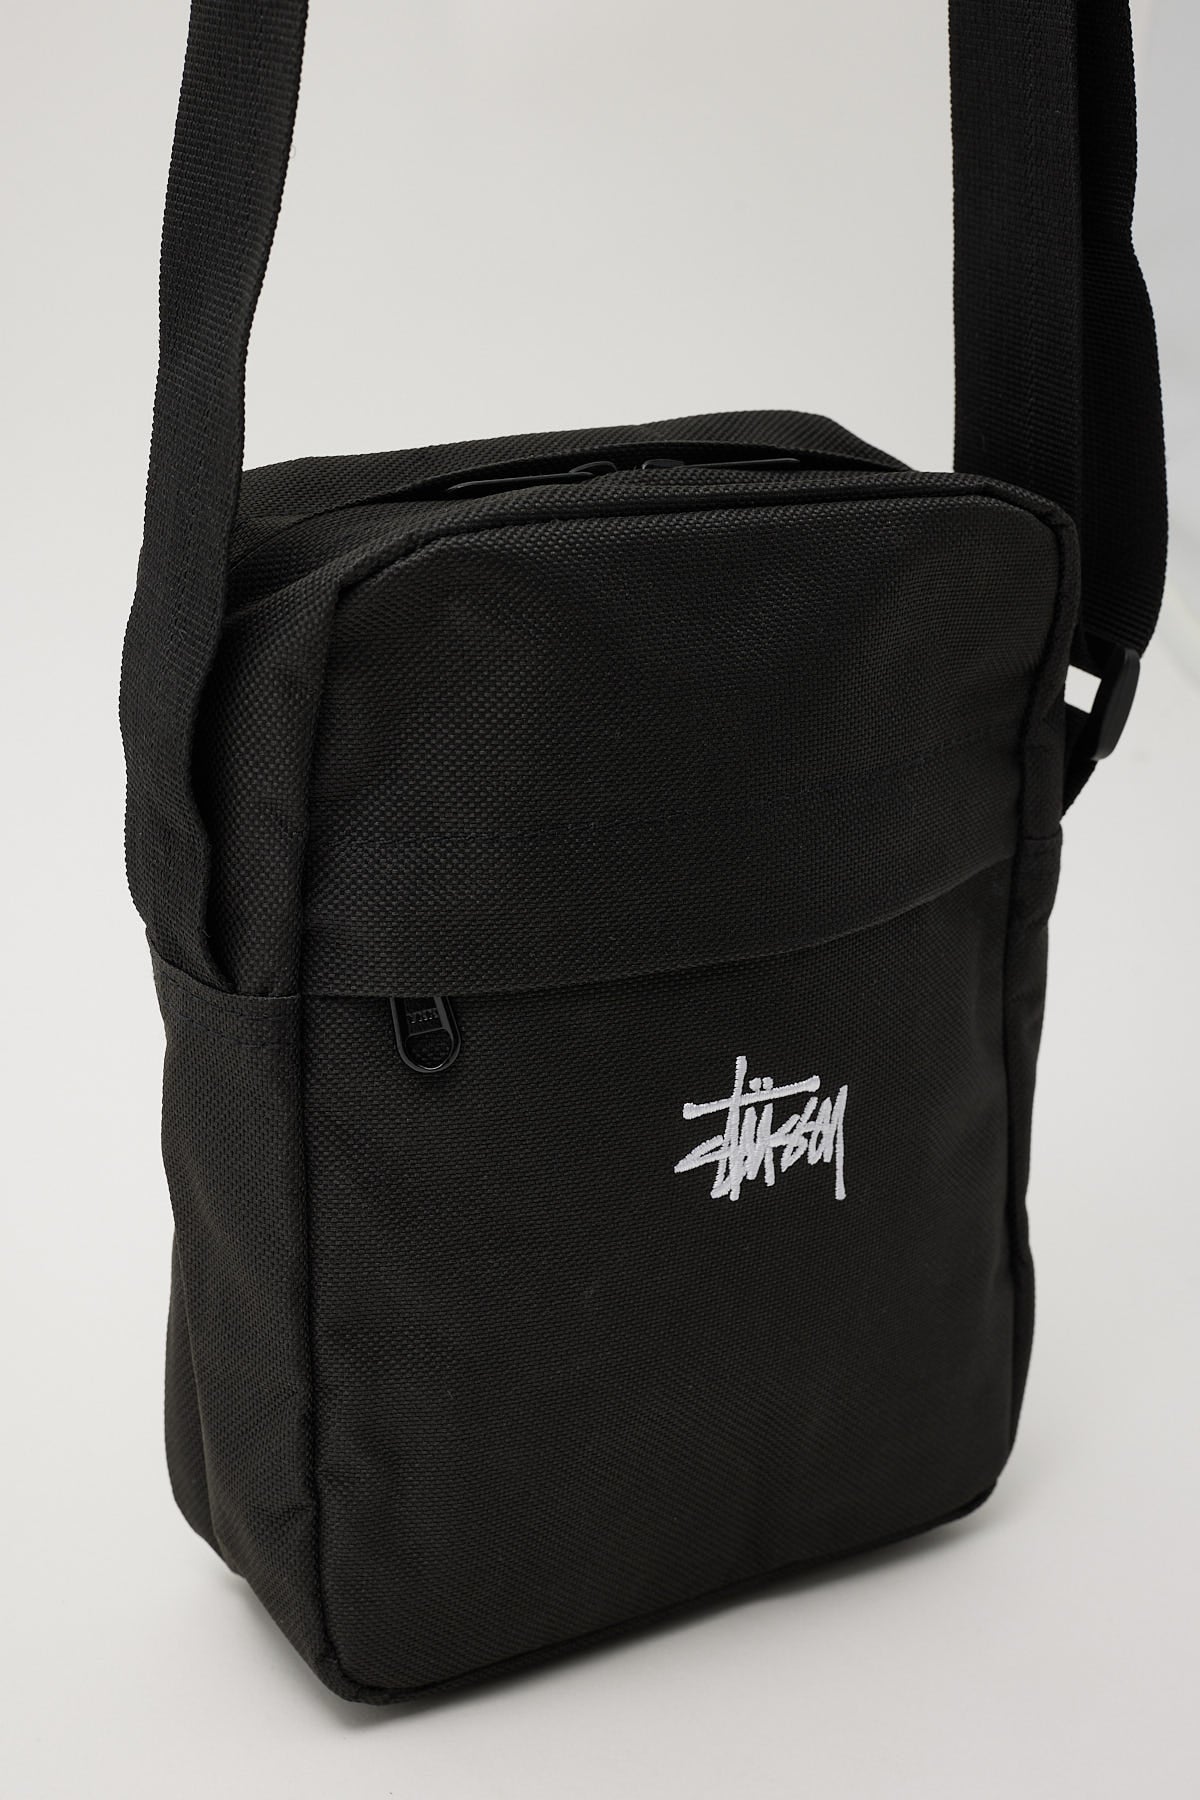 Stussy Graffiti Messenger Bag Black